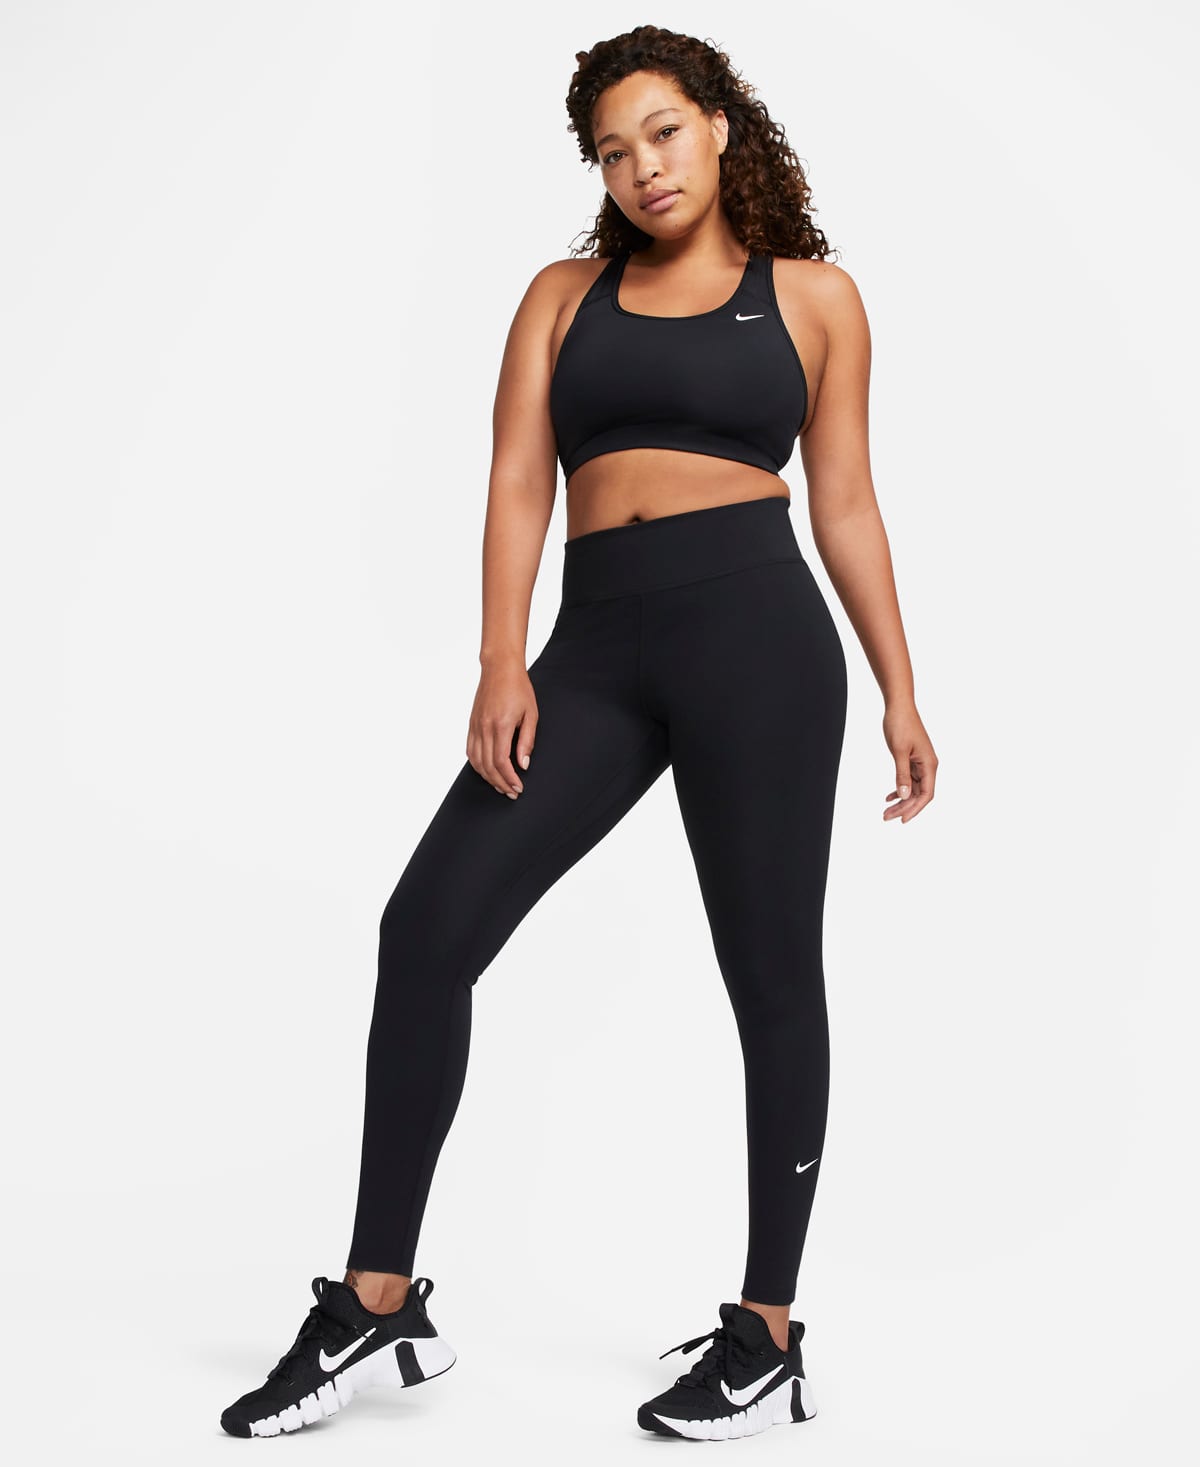 Nike - Size Chart - Women - Bottoms